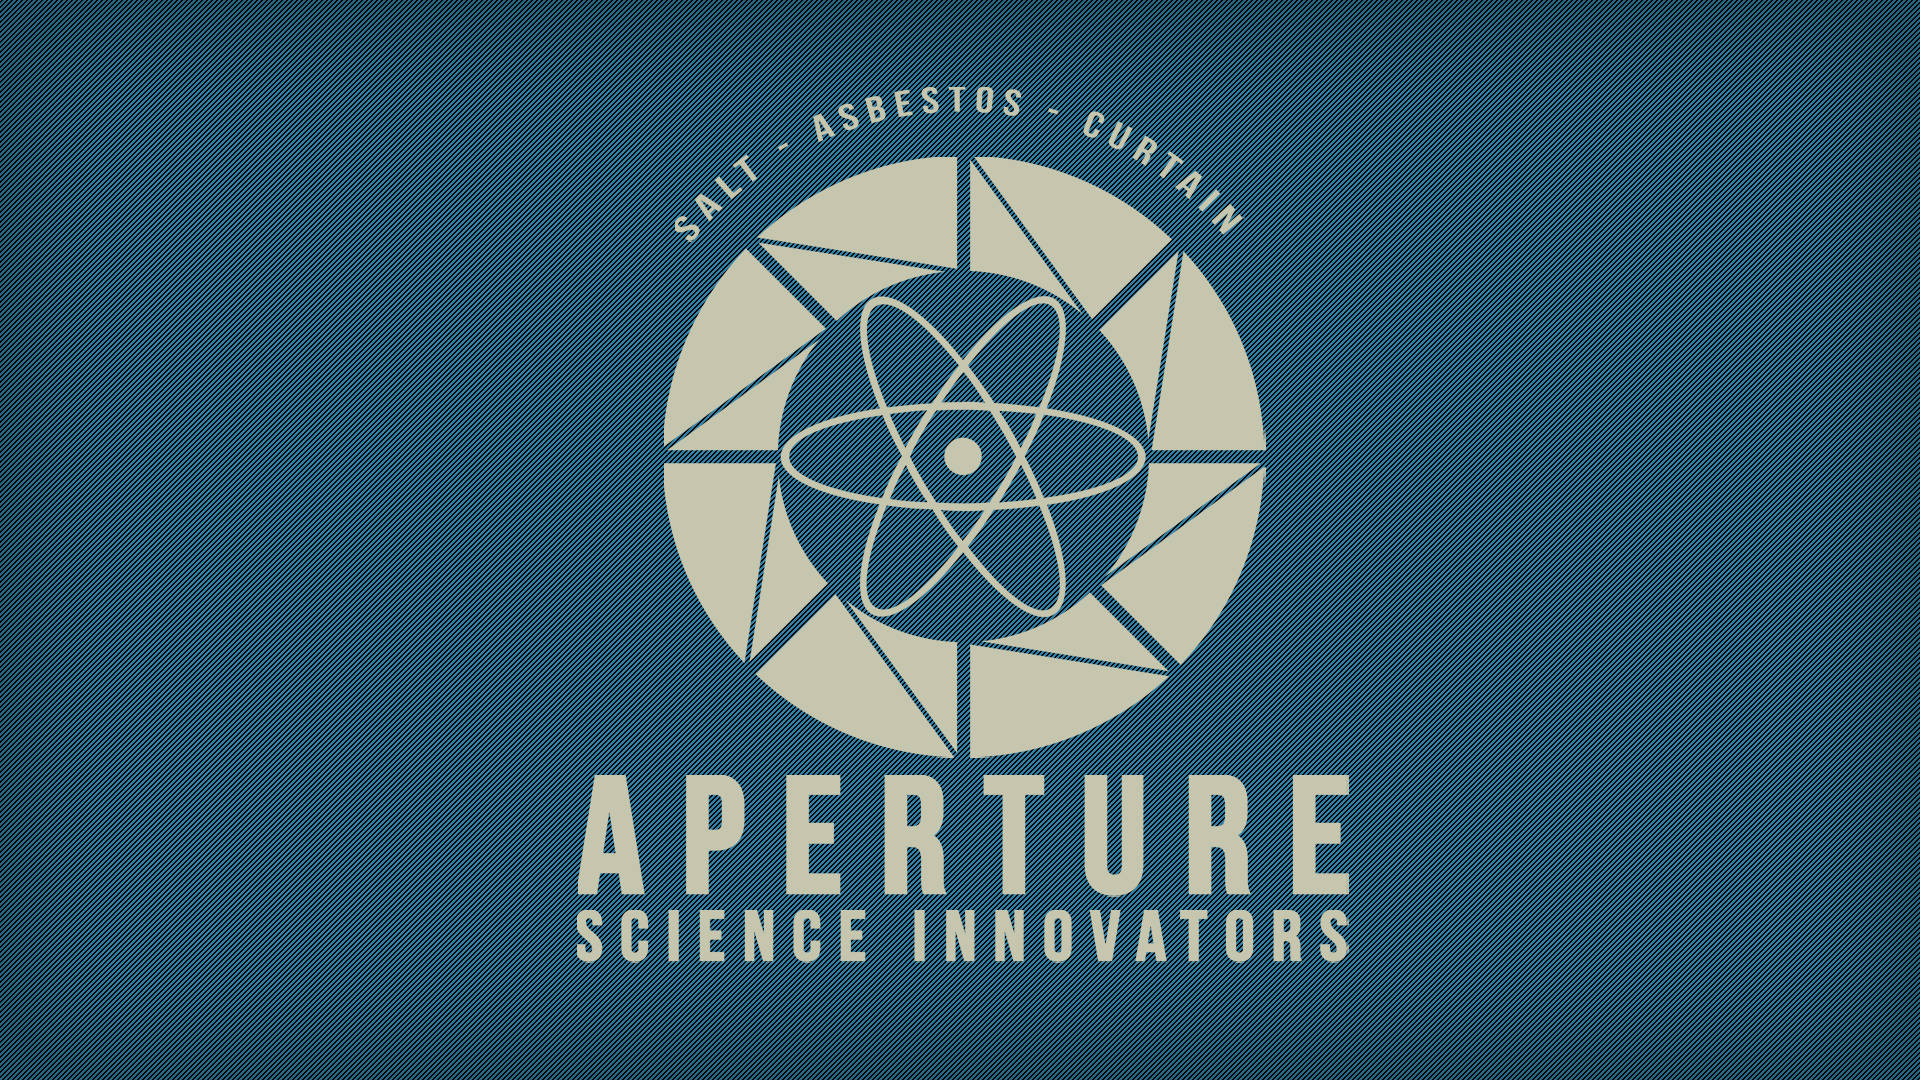 Aperture Science Innovators Logo Wallpaper